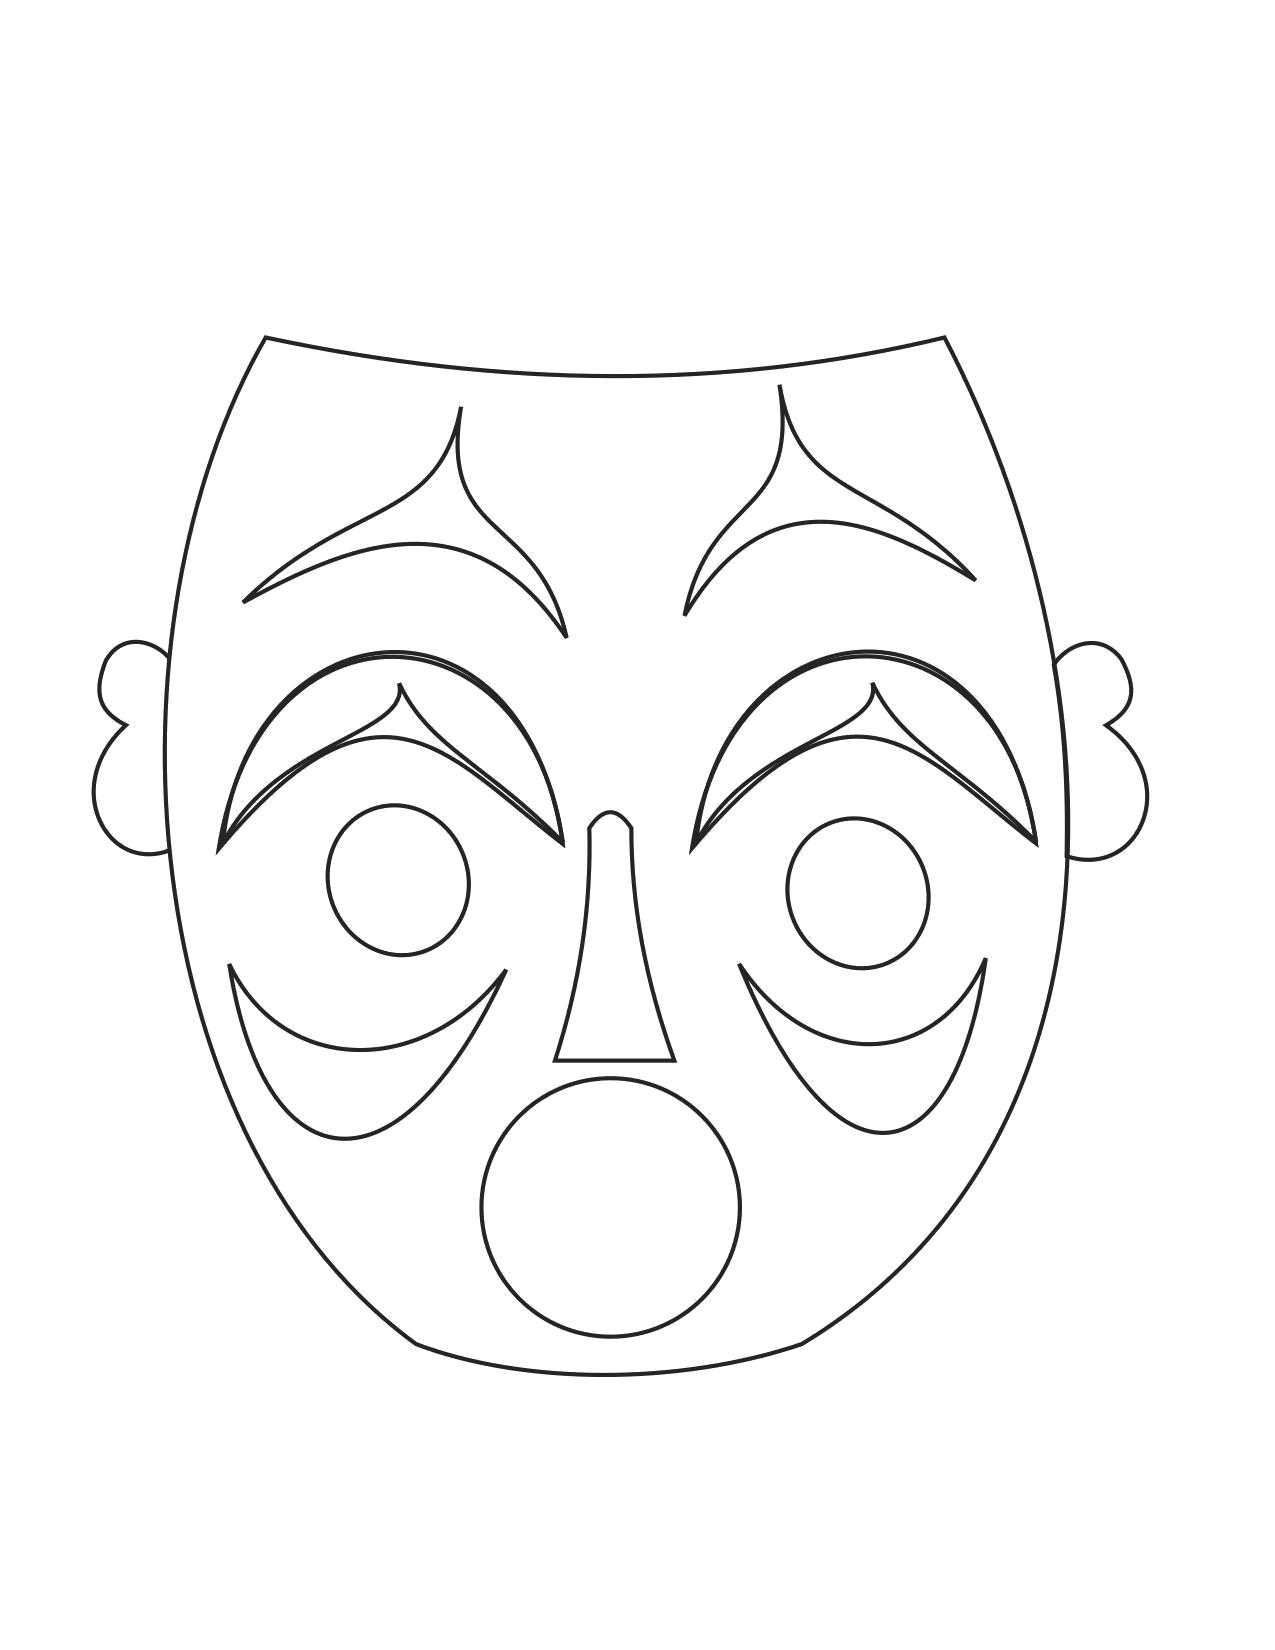 Coloring Naughty mask. Category Masks . Tags:  mask.